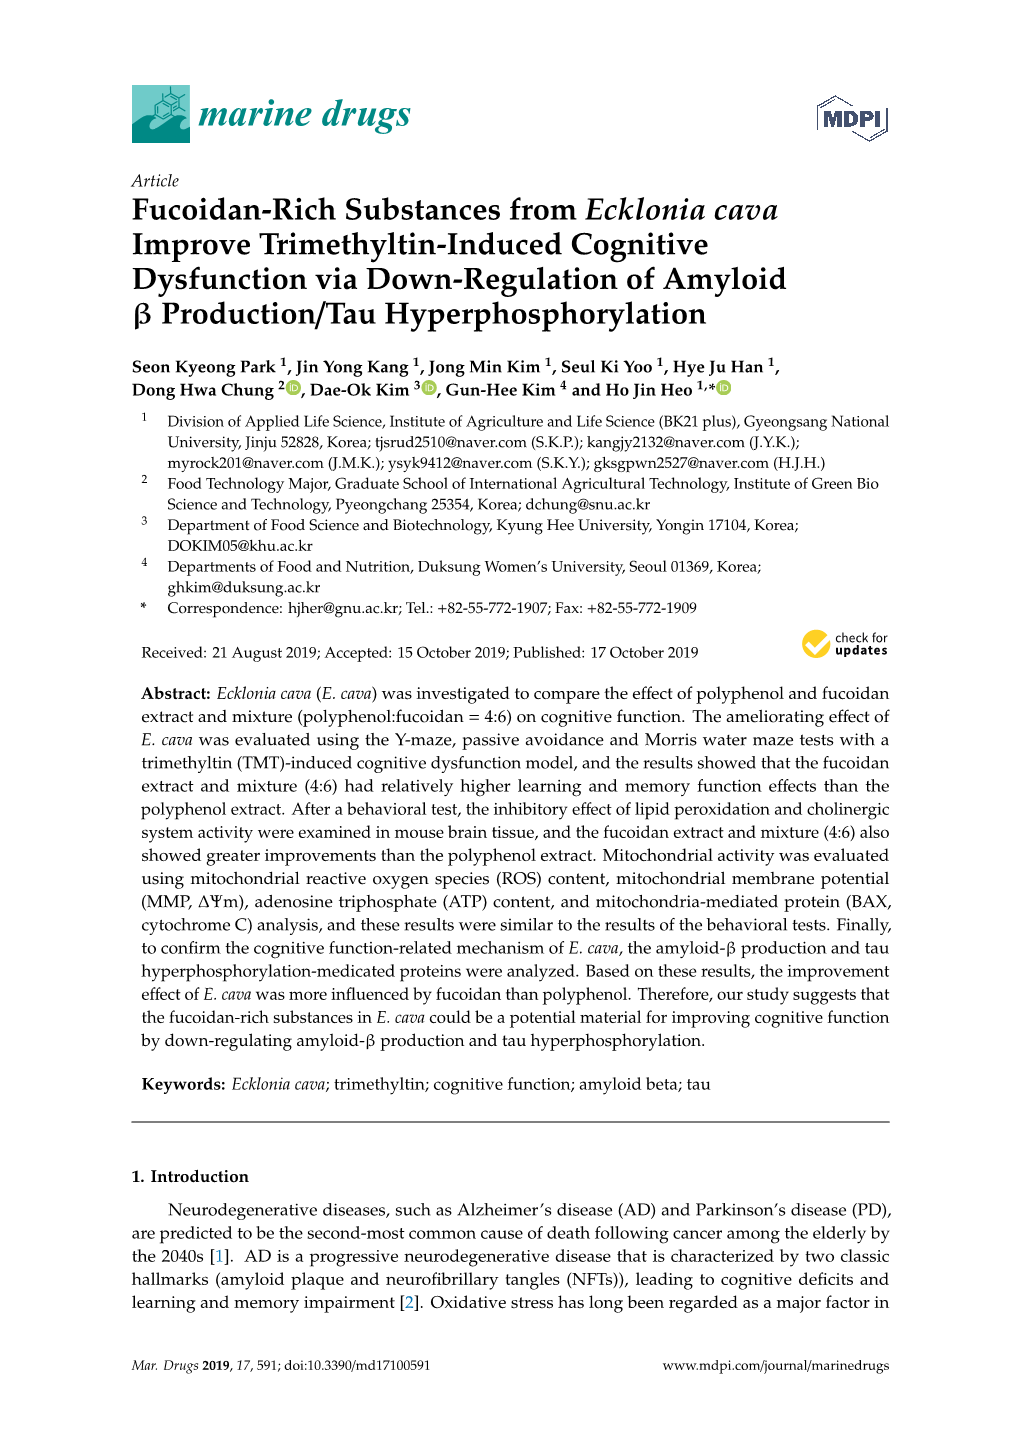 Fucoidan-Rich Substances from Ecklonia Cava Improve Trimethyltin-Induced Cognitive Dysfunction Via Down-Regulation of Amyloid Β Production/Tau Hyperphosphorylation